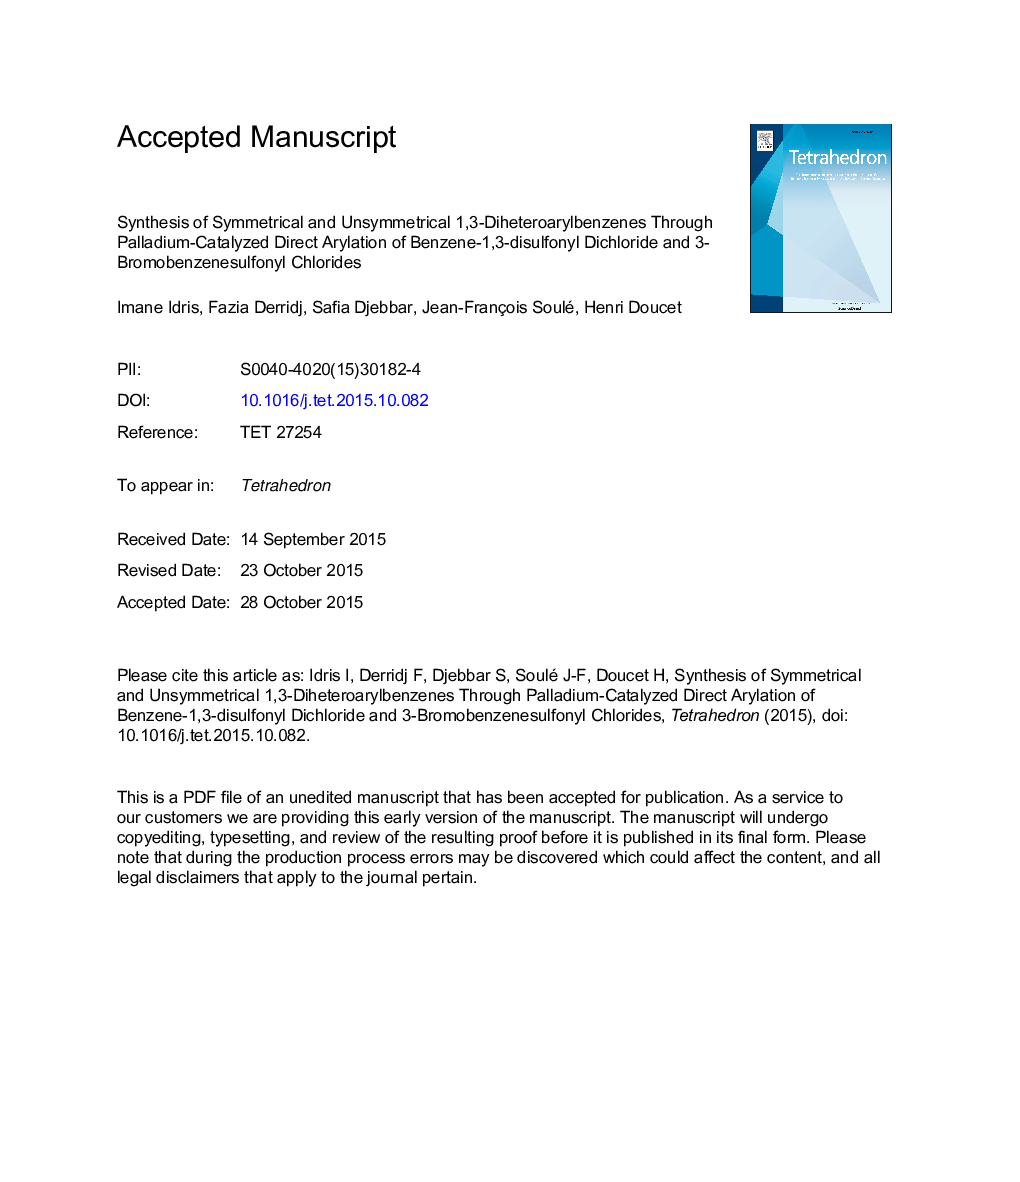 Synthesis of symmetrical and unsymmetrical 1,3-diheteroarylbenzenes through palladium-catalyzed direct arylation of benzene-1,3-disulfonyl dichloride and 3-bromobenzenesulfonyl chlorides